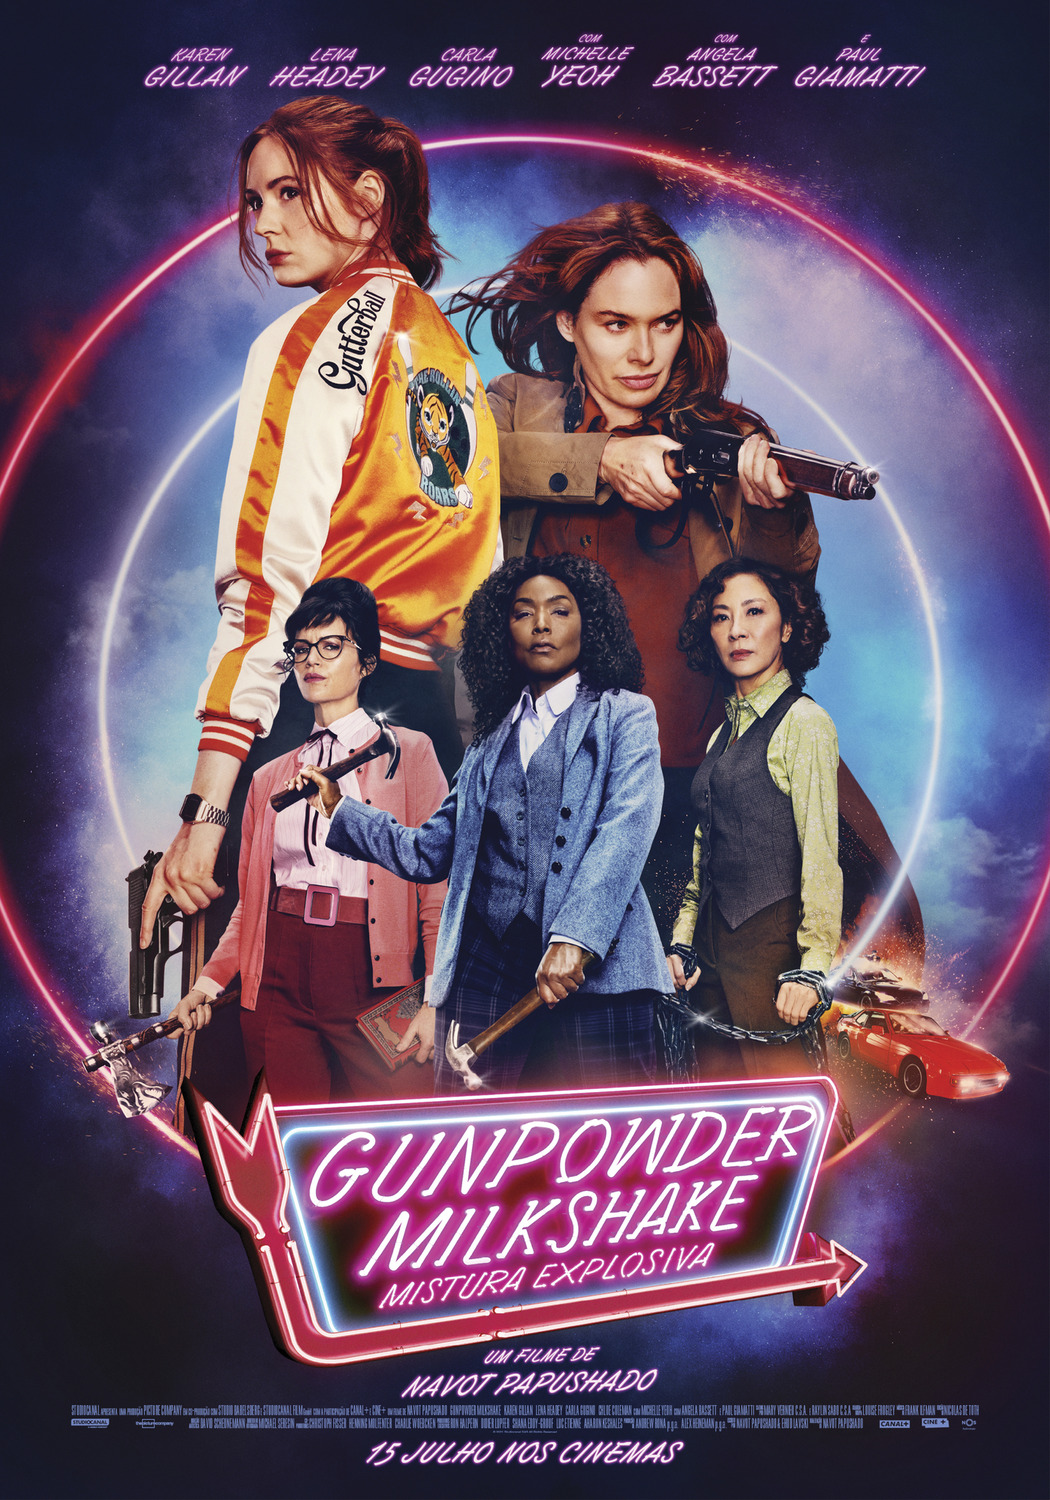 Extra Large Movie Poster Image for Gunpowder Milkshake (#4 of 5)